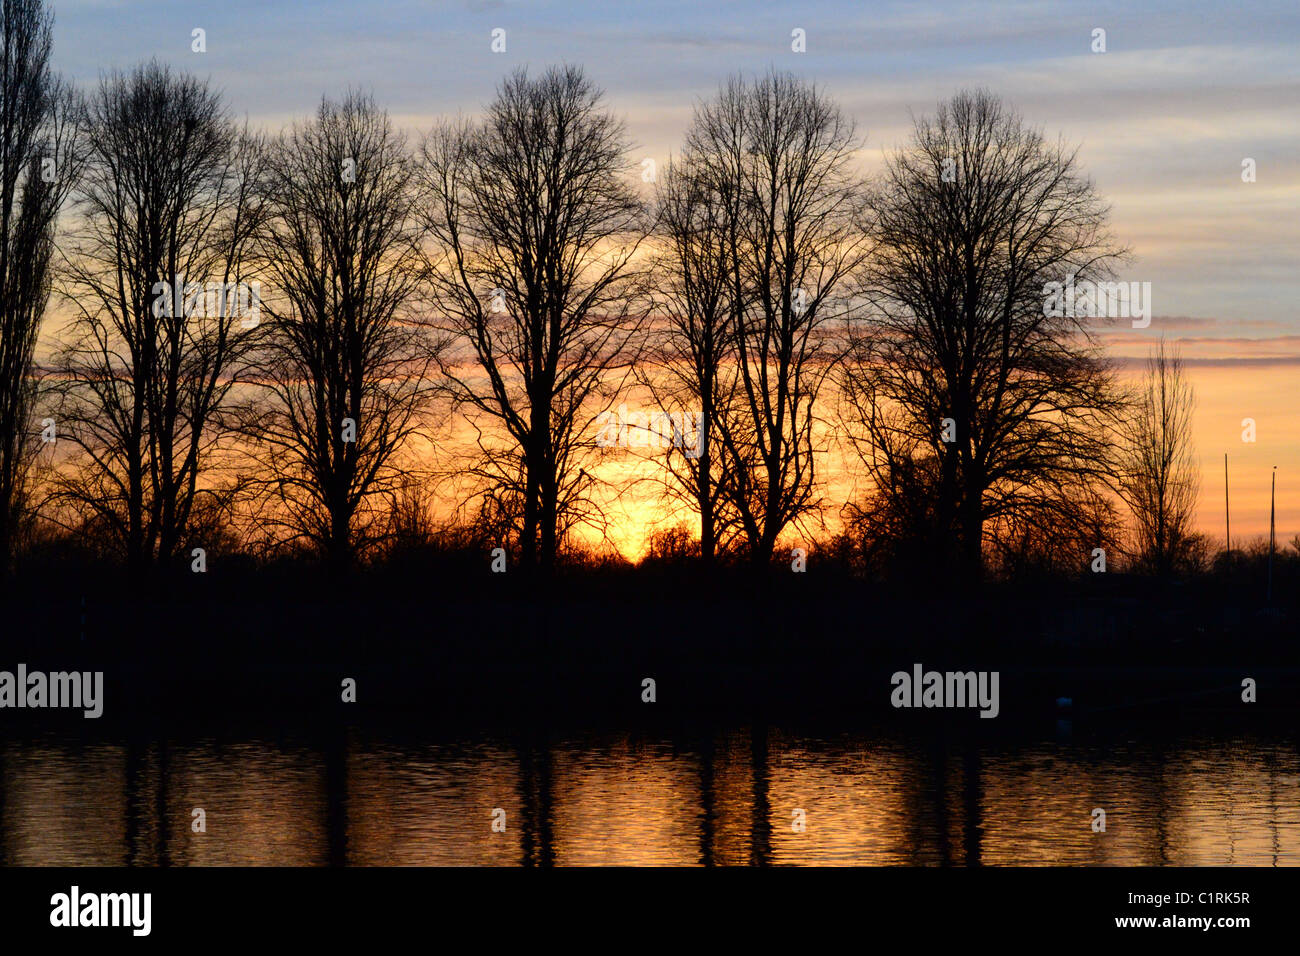 Thames at sunset, Kingston, Surrey, UK ARTIFEX LUCIS Stock Photo